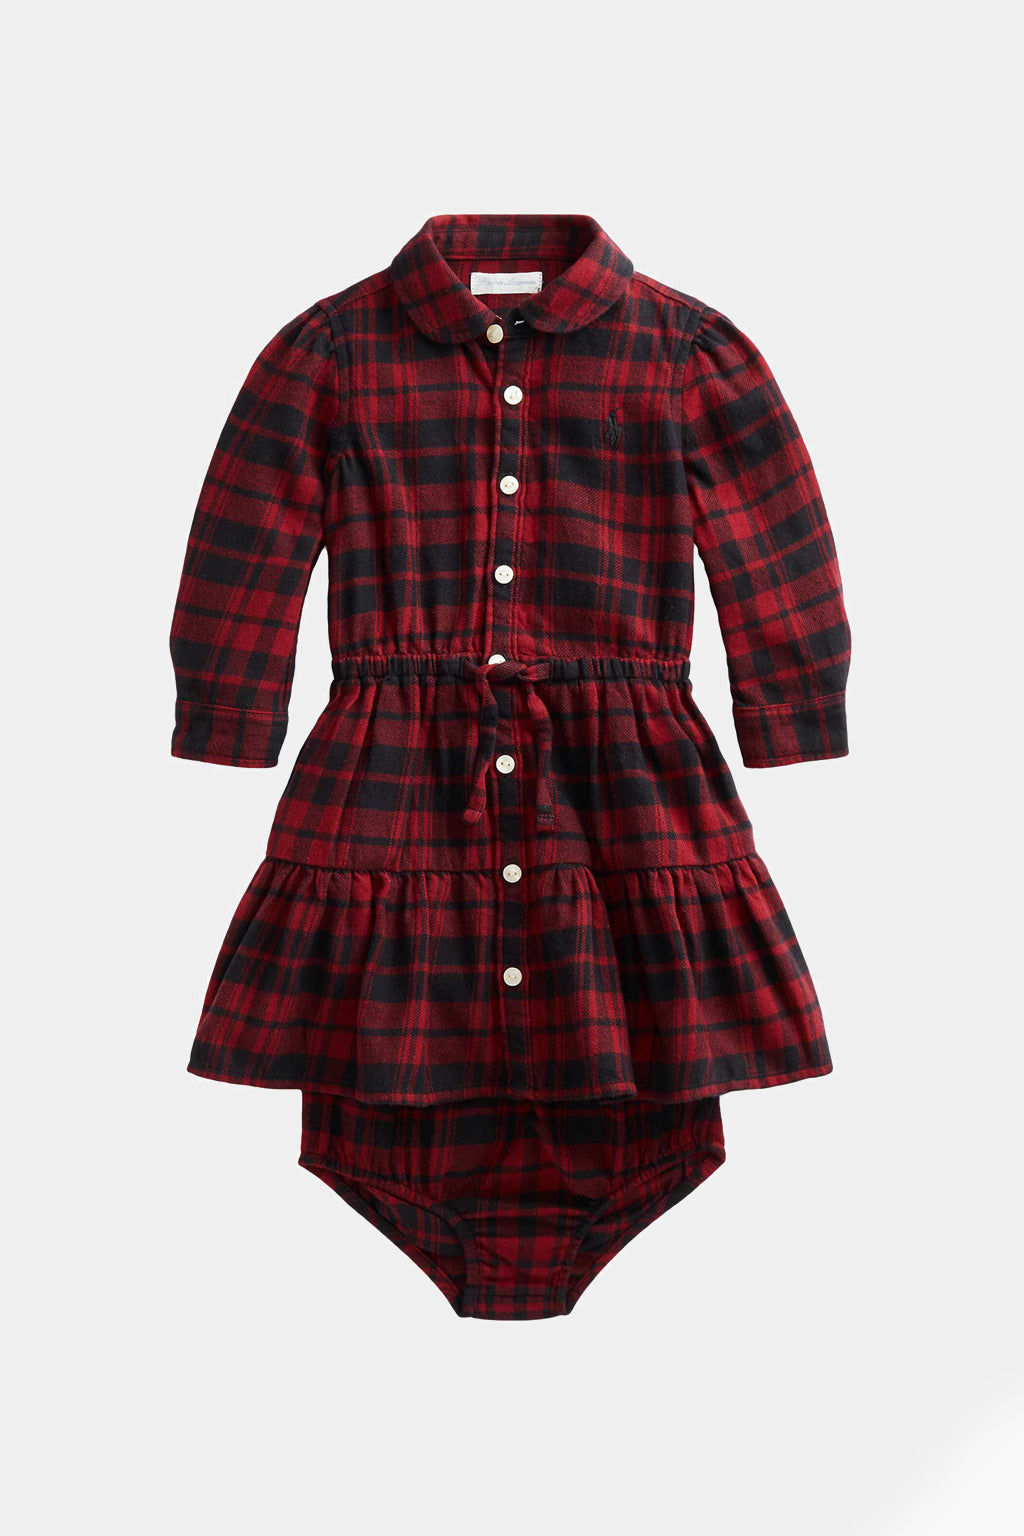 Polo Ralph Lauren - Girl's Plaid Cotton Twill Shirtdress - Little Kid In Black/Red